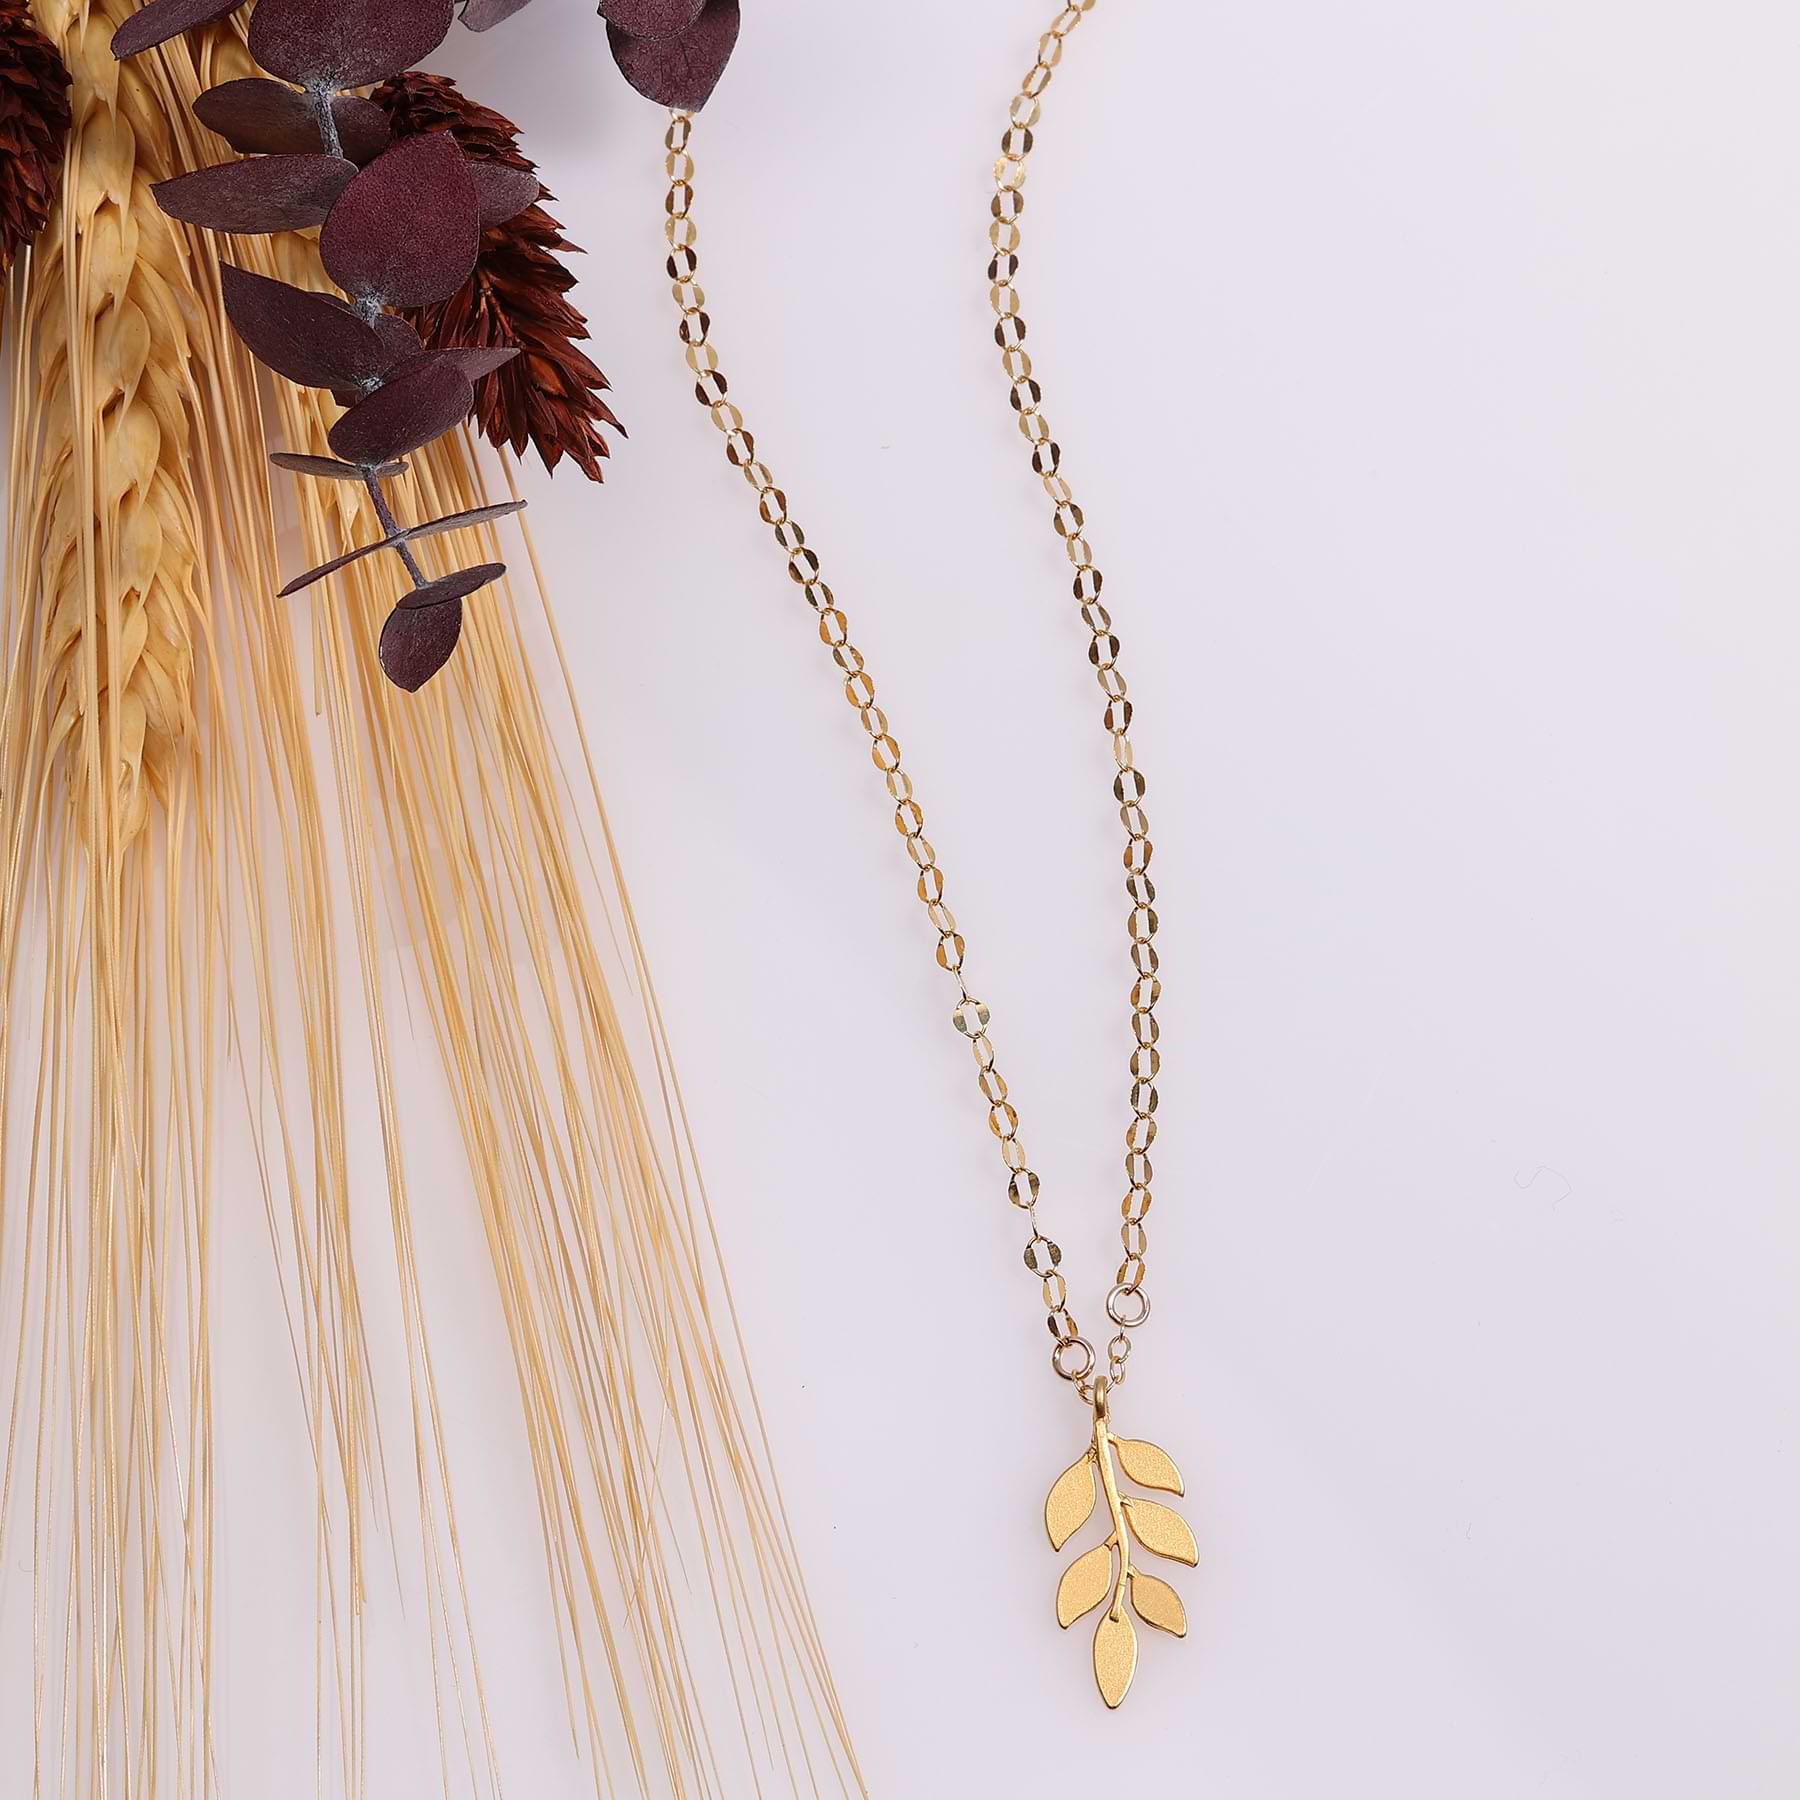 Big Maple Leaf Pendant Autumn Necklace - Canadian Jewelry - Nadin Art  Design - Personalized Jewelry